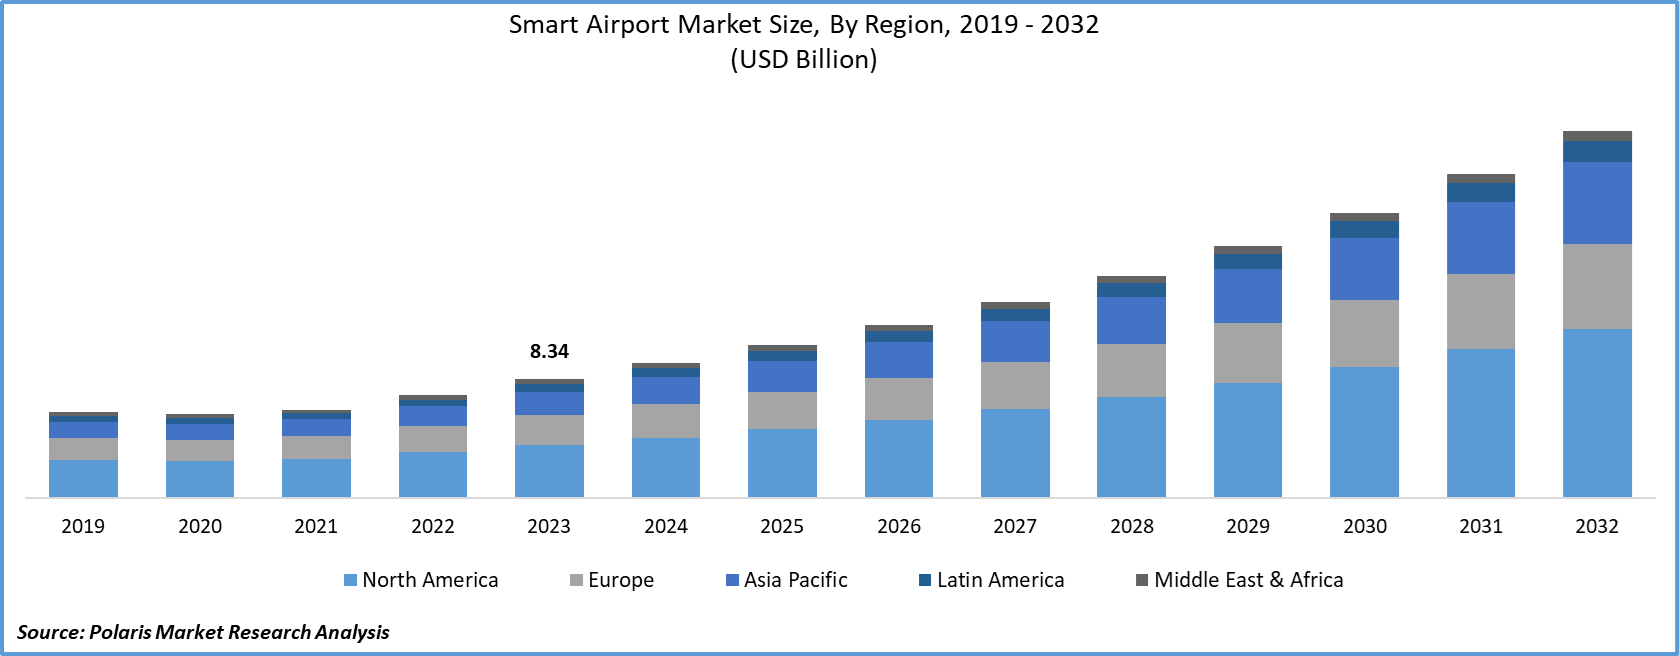 Smart Airport Market Size